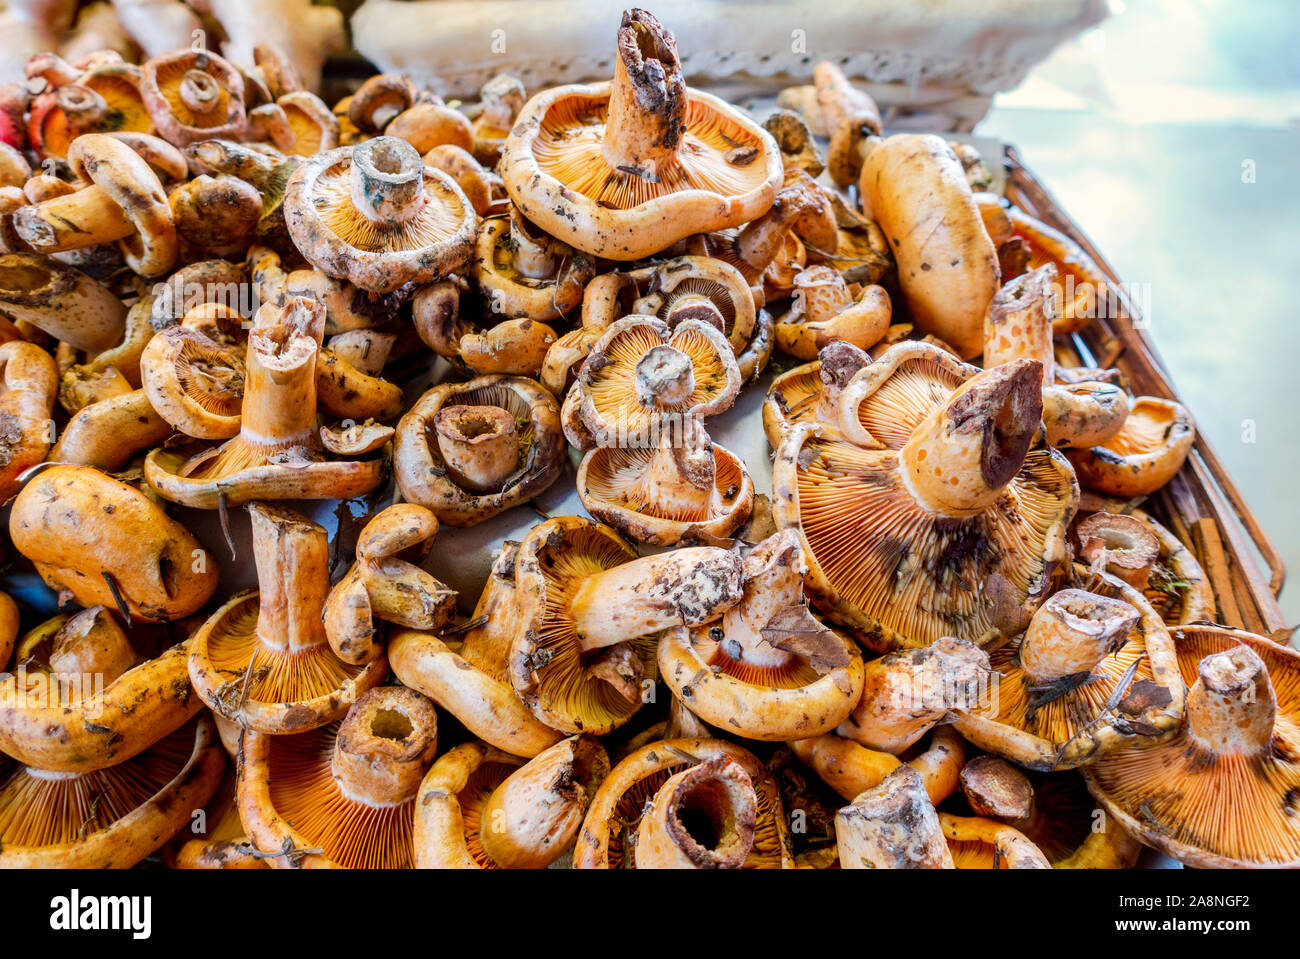 saffron milk cap or pine mushroom, (Lactarius deliciosus ) sold at a market in Malaga, Spain. Stock Photo